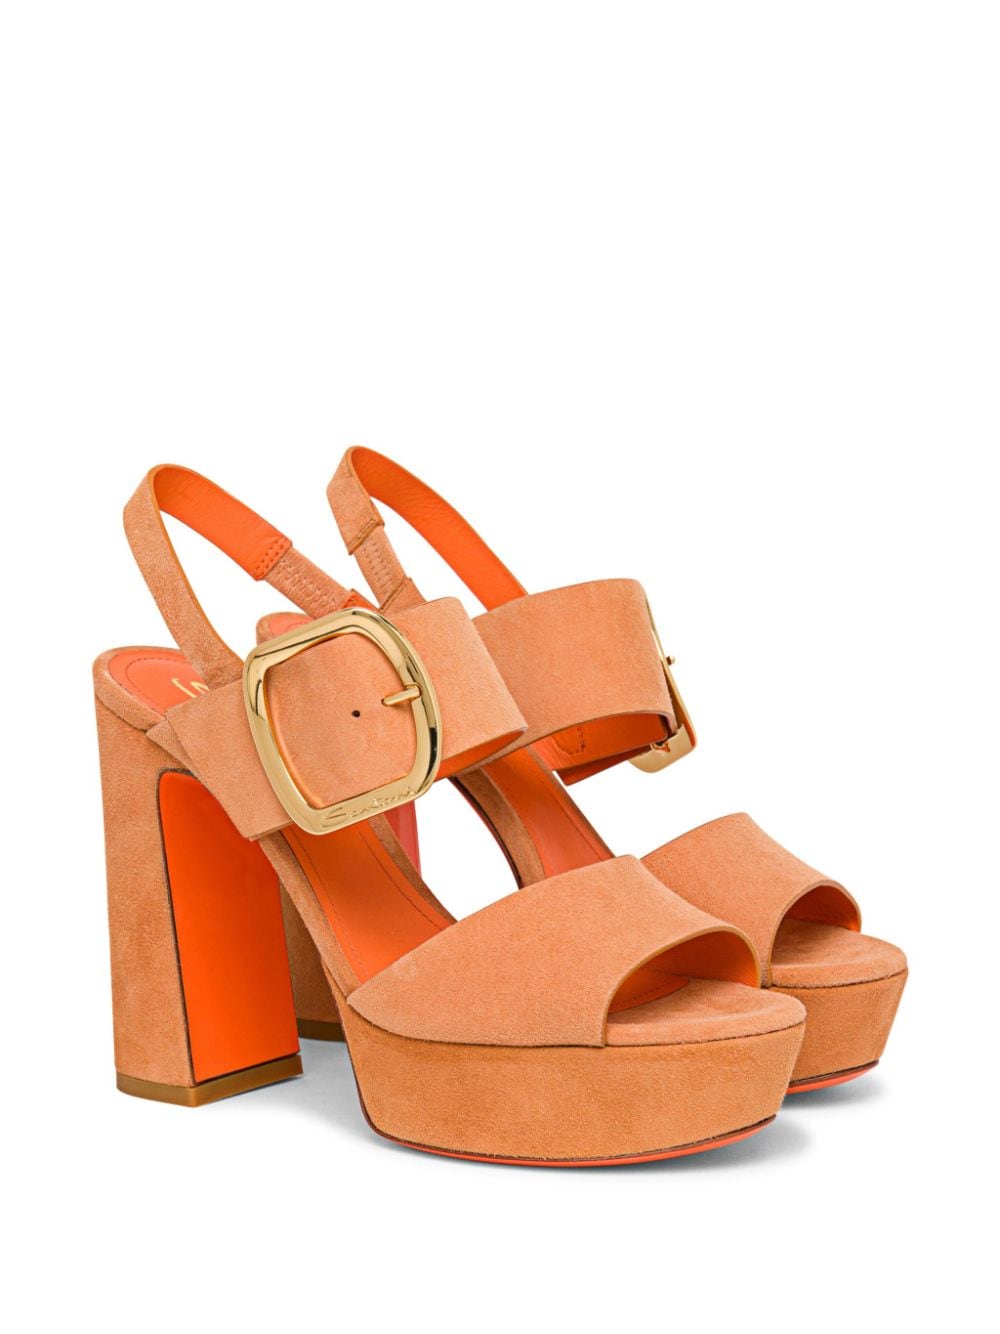 Santoni buckled suede sandals - Oranje